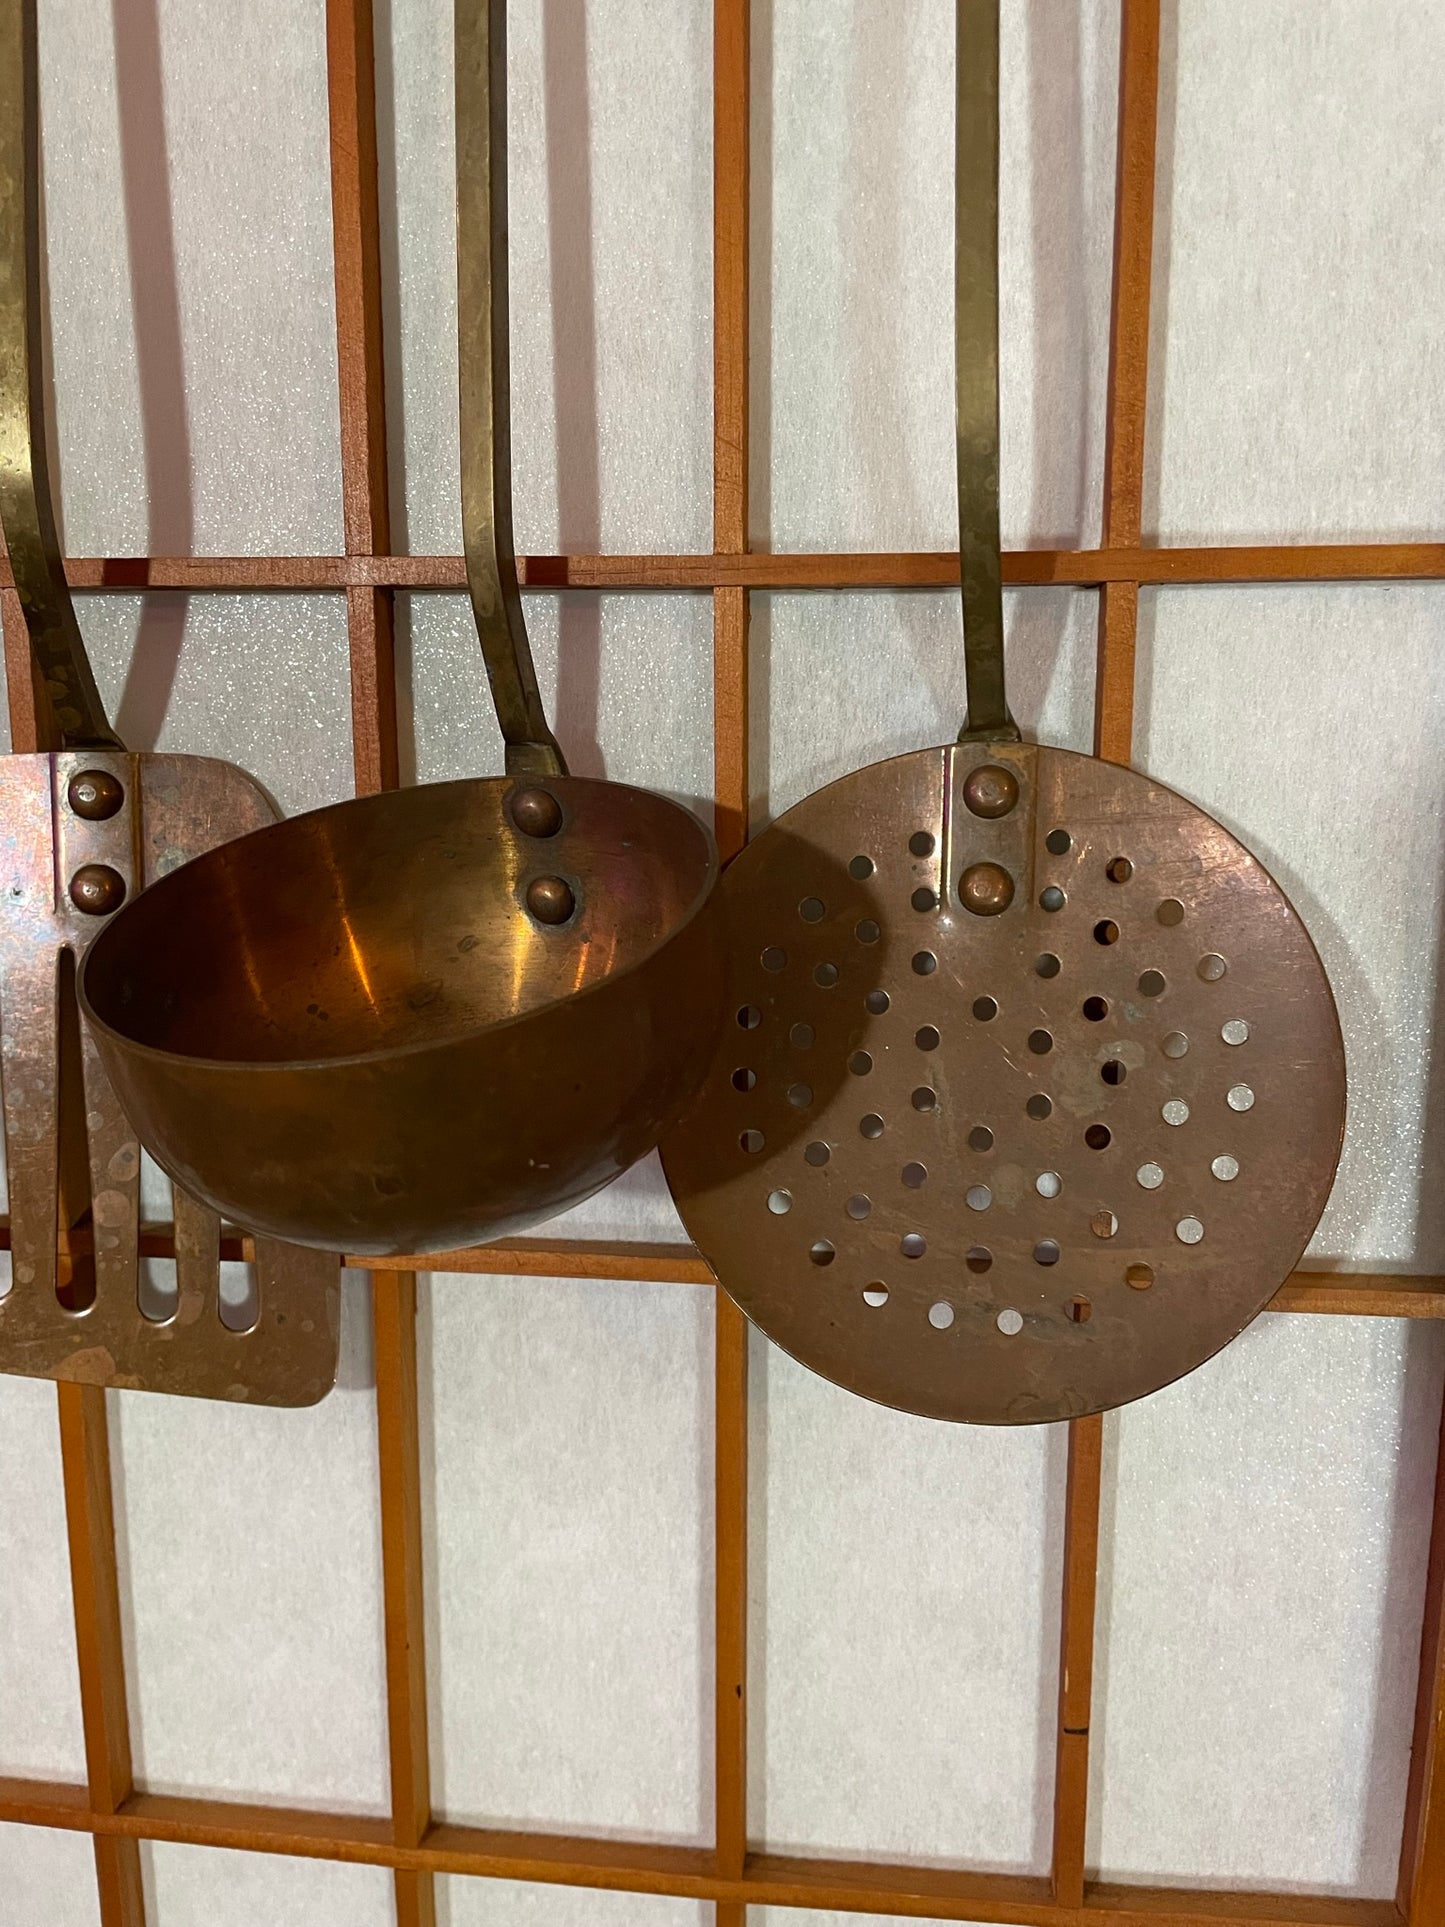 Copper Vintage Hanging Kitchen Utensils